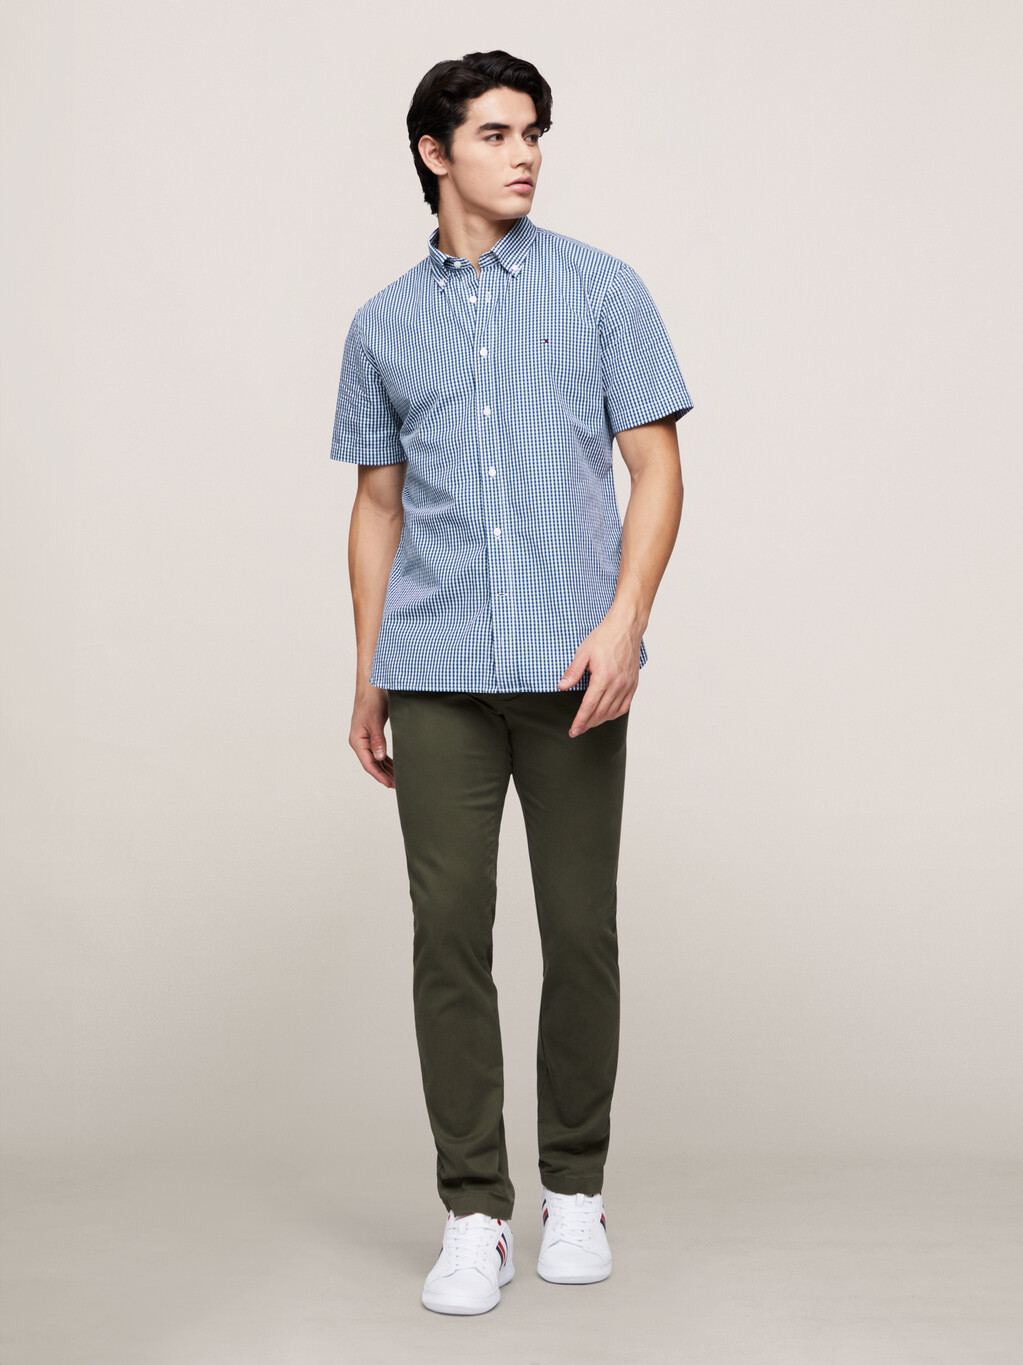 Essential Check Short Sleeve Shirt, Anchor Blue, hi-res